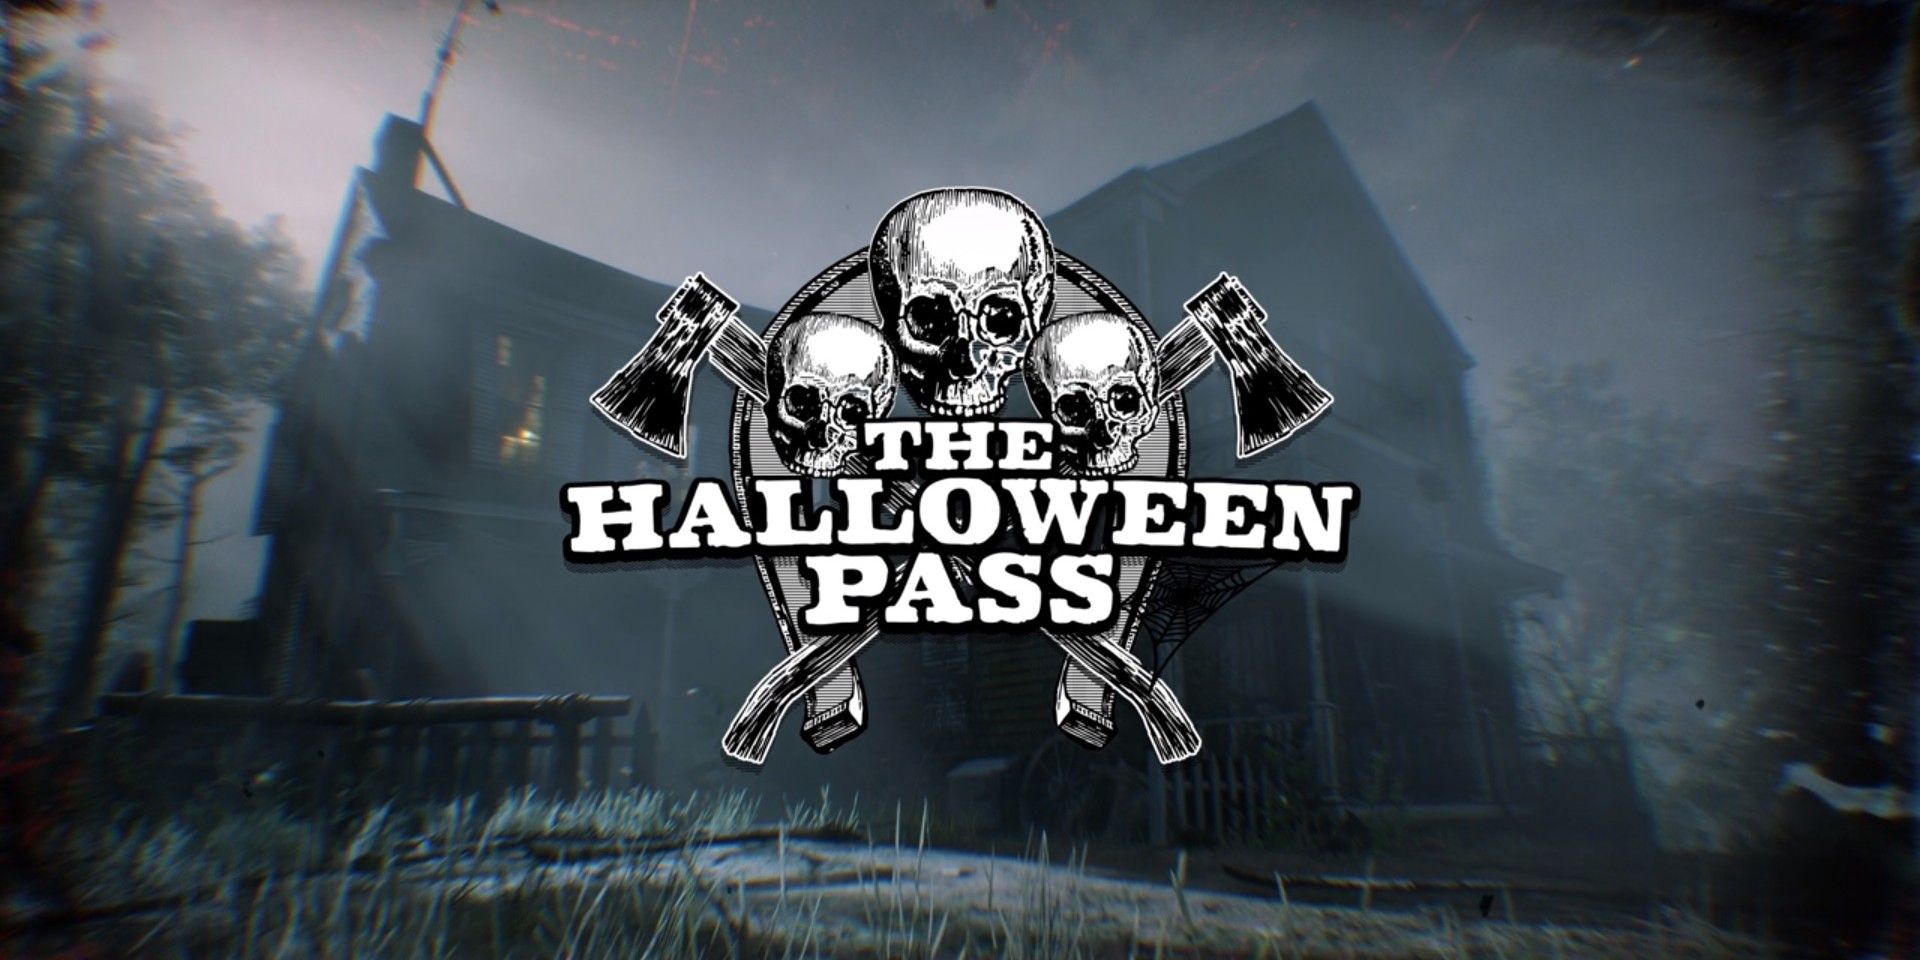 Red Dead Online Halloween Pass Update Brings Dead Of Night Zombie Mode